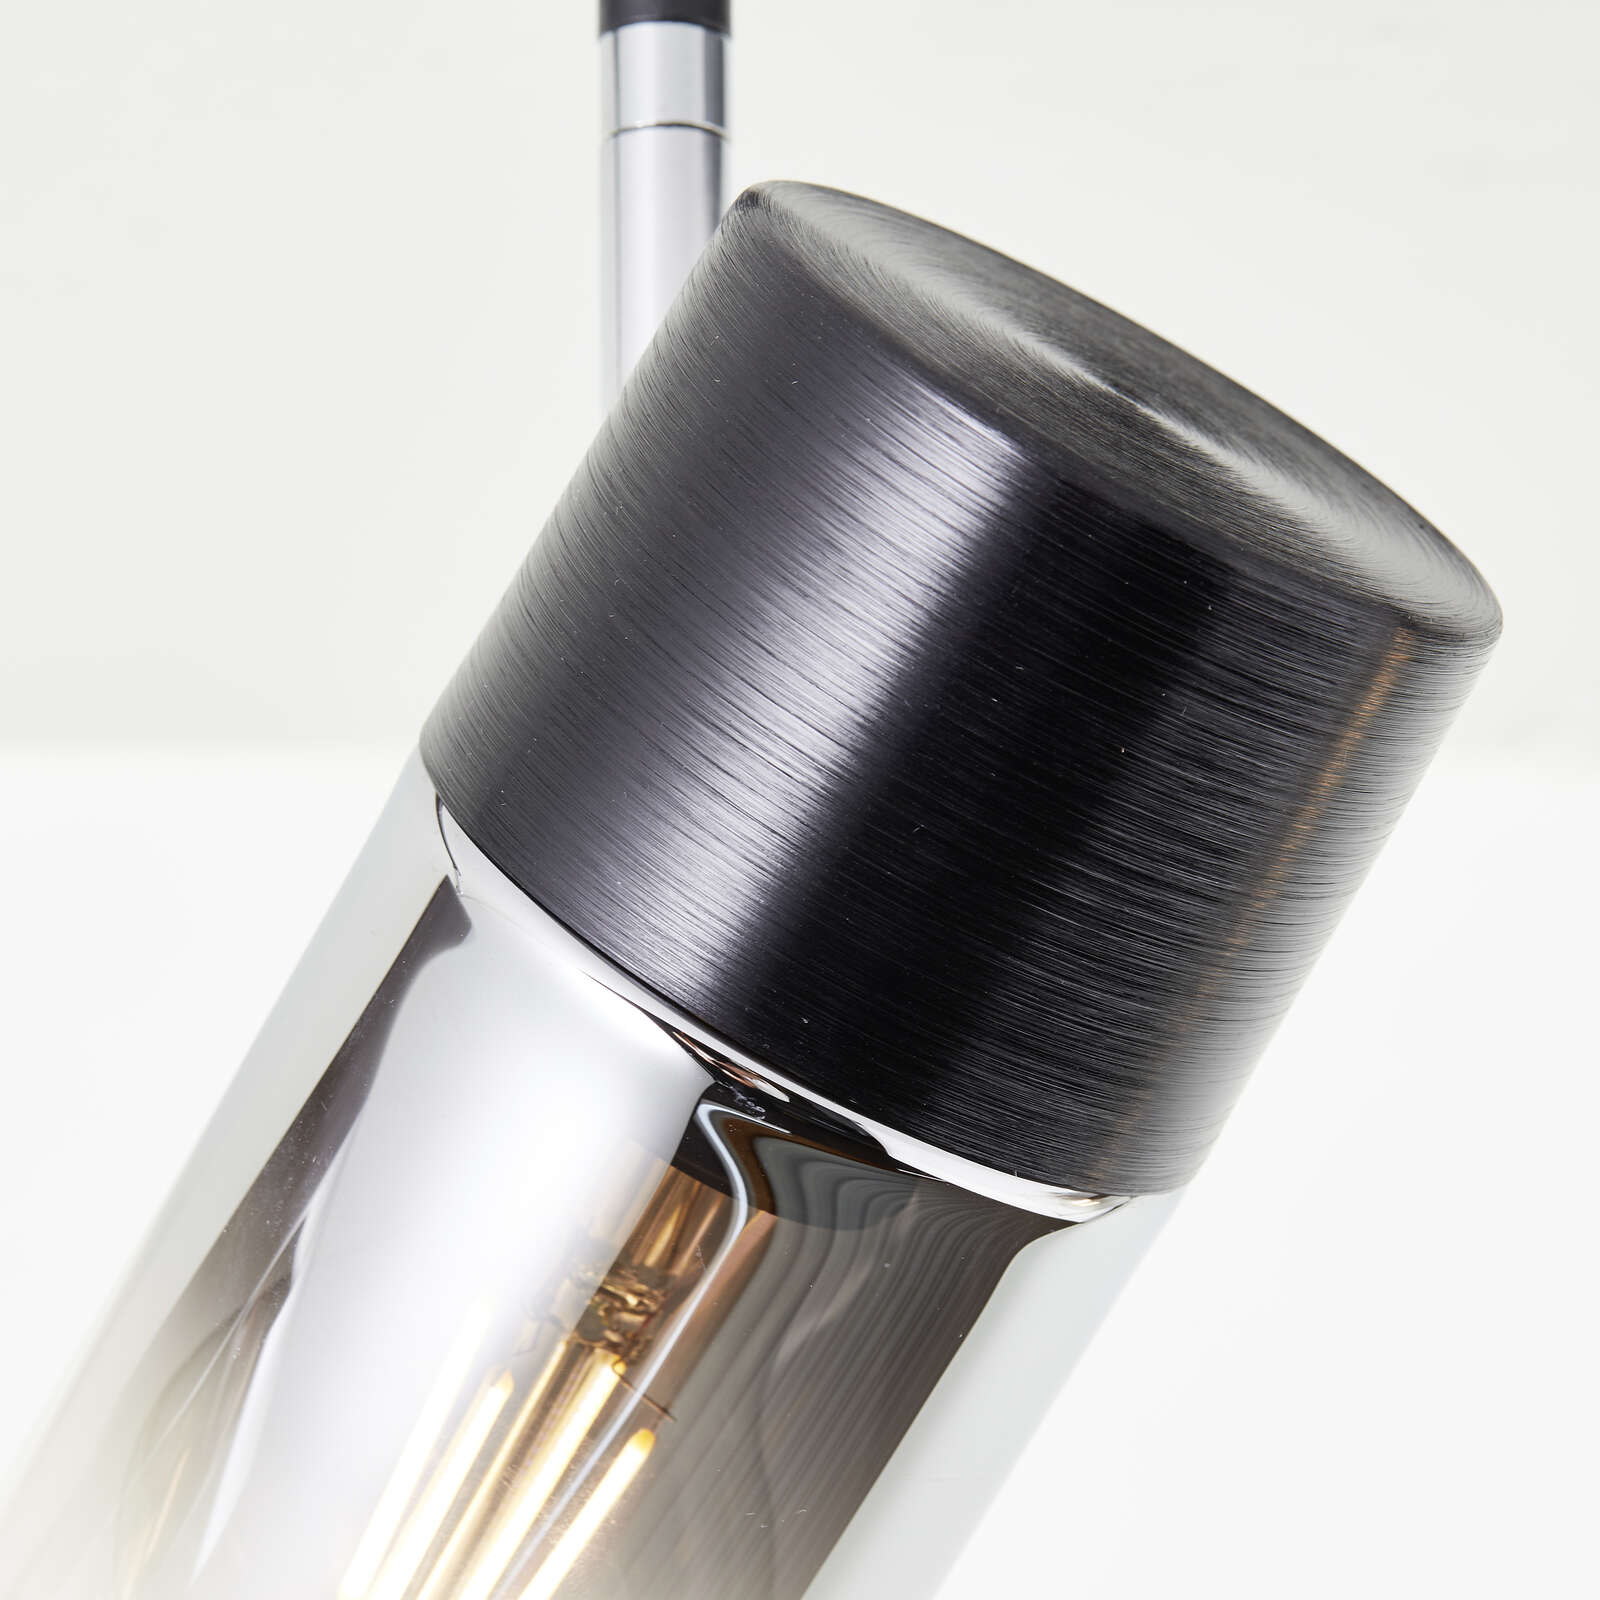             Metal spotlight tube - Aiden 2 - Grey
        